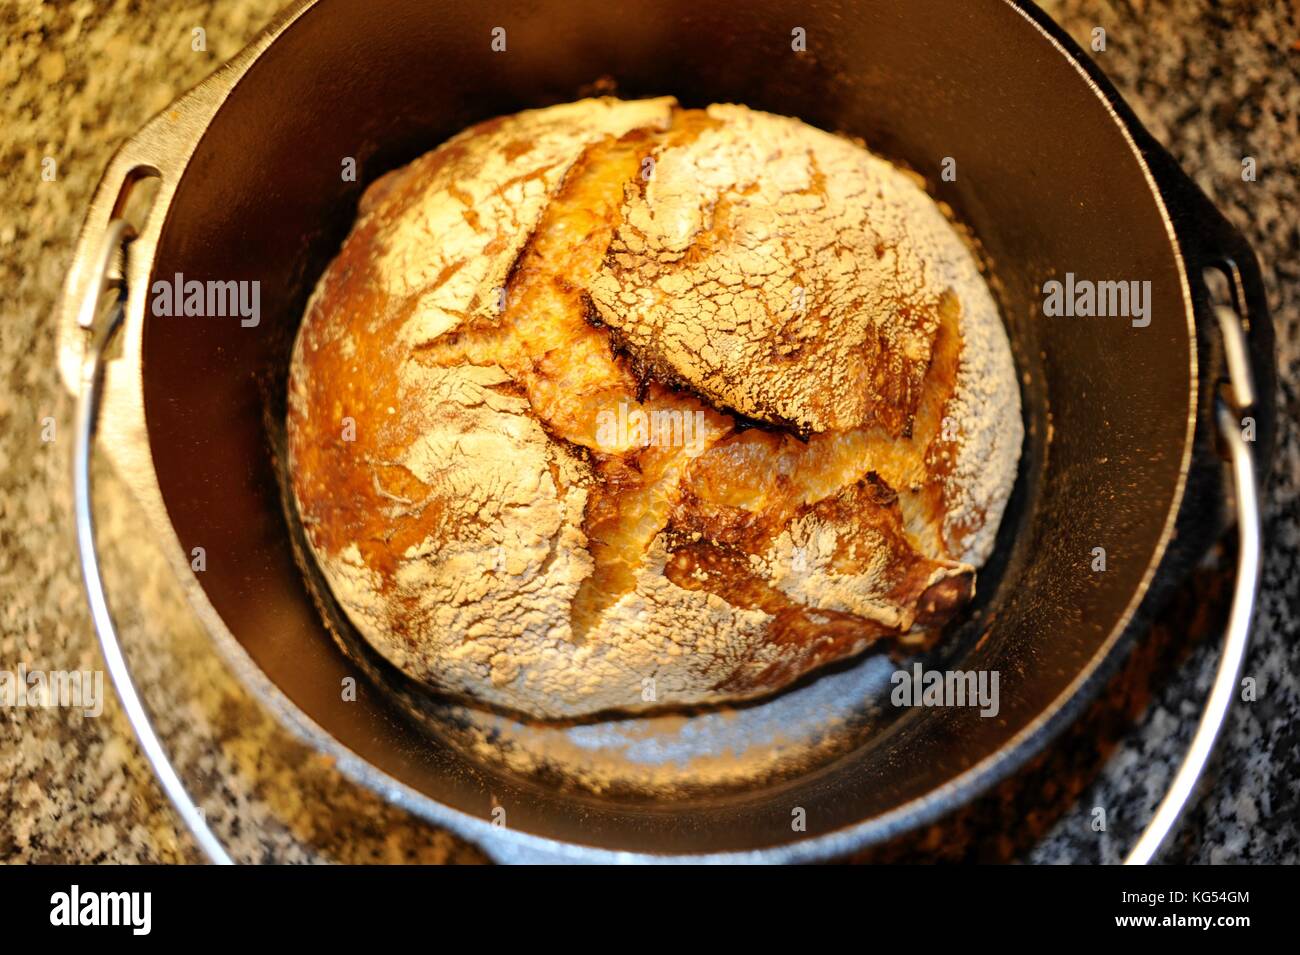 https://c8.alamy.com/comp/KG54GM/fresh-crusty-loaf-of-artisanal-homemade-bread-baked-in-a-lodge-dutch-KG54GM.jpg